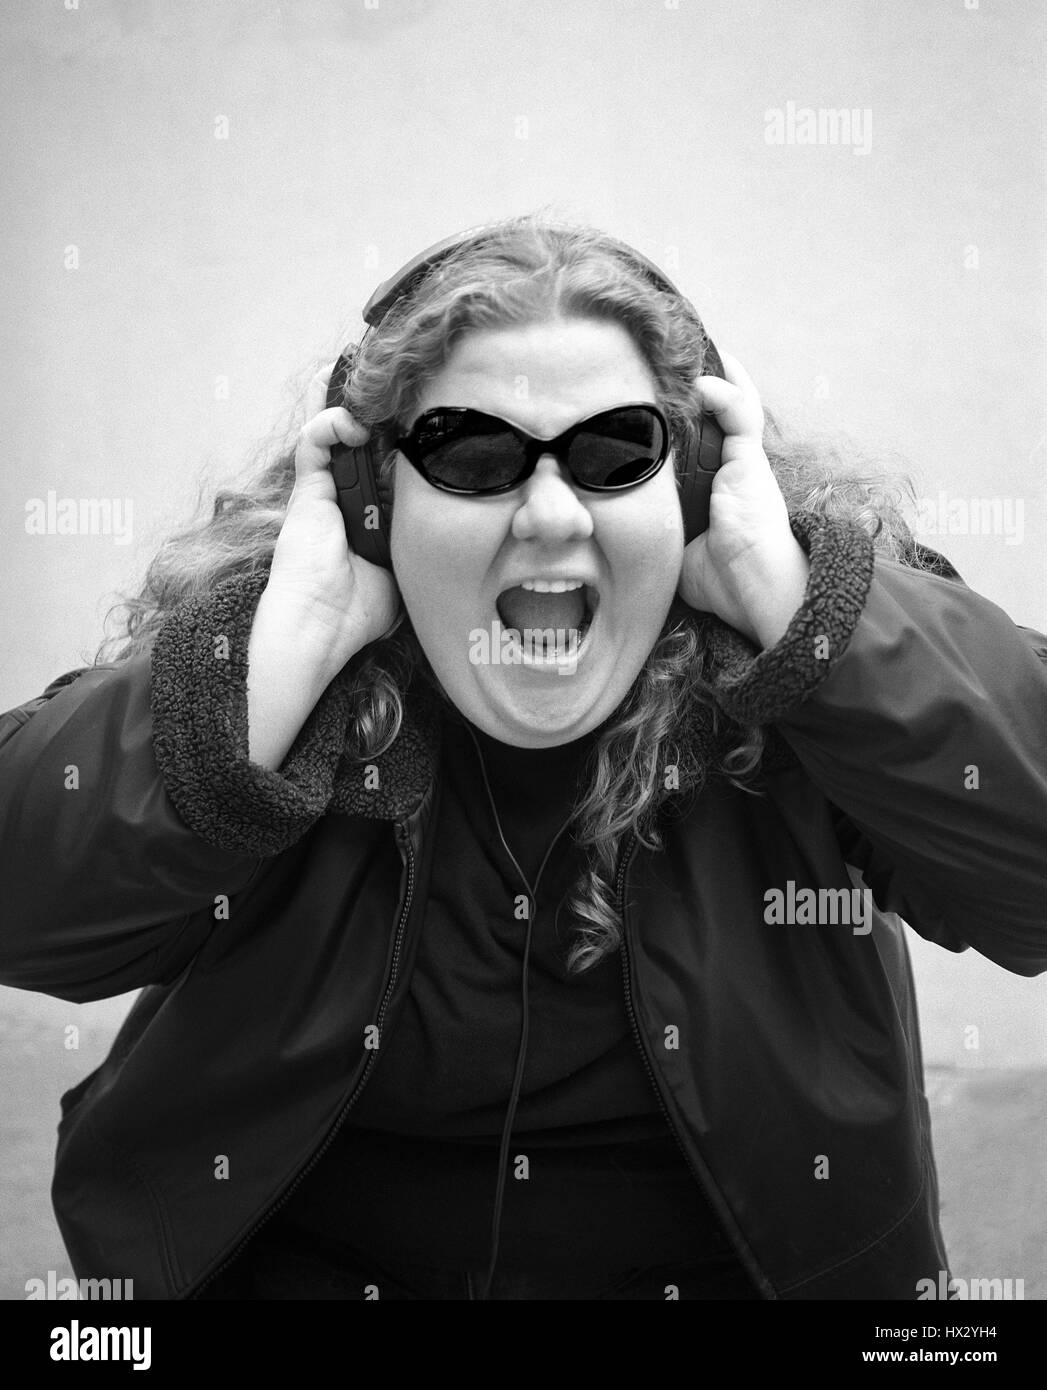 Screaming woman wearing headphones and sunglasses. Stock Photo